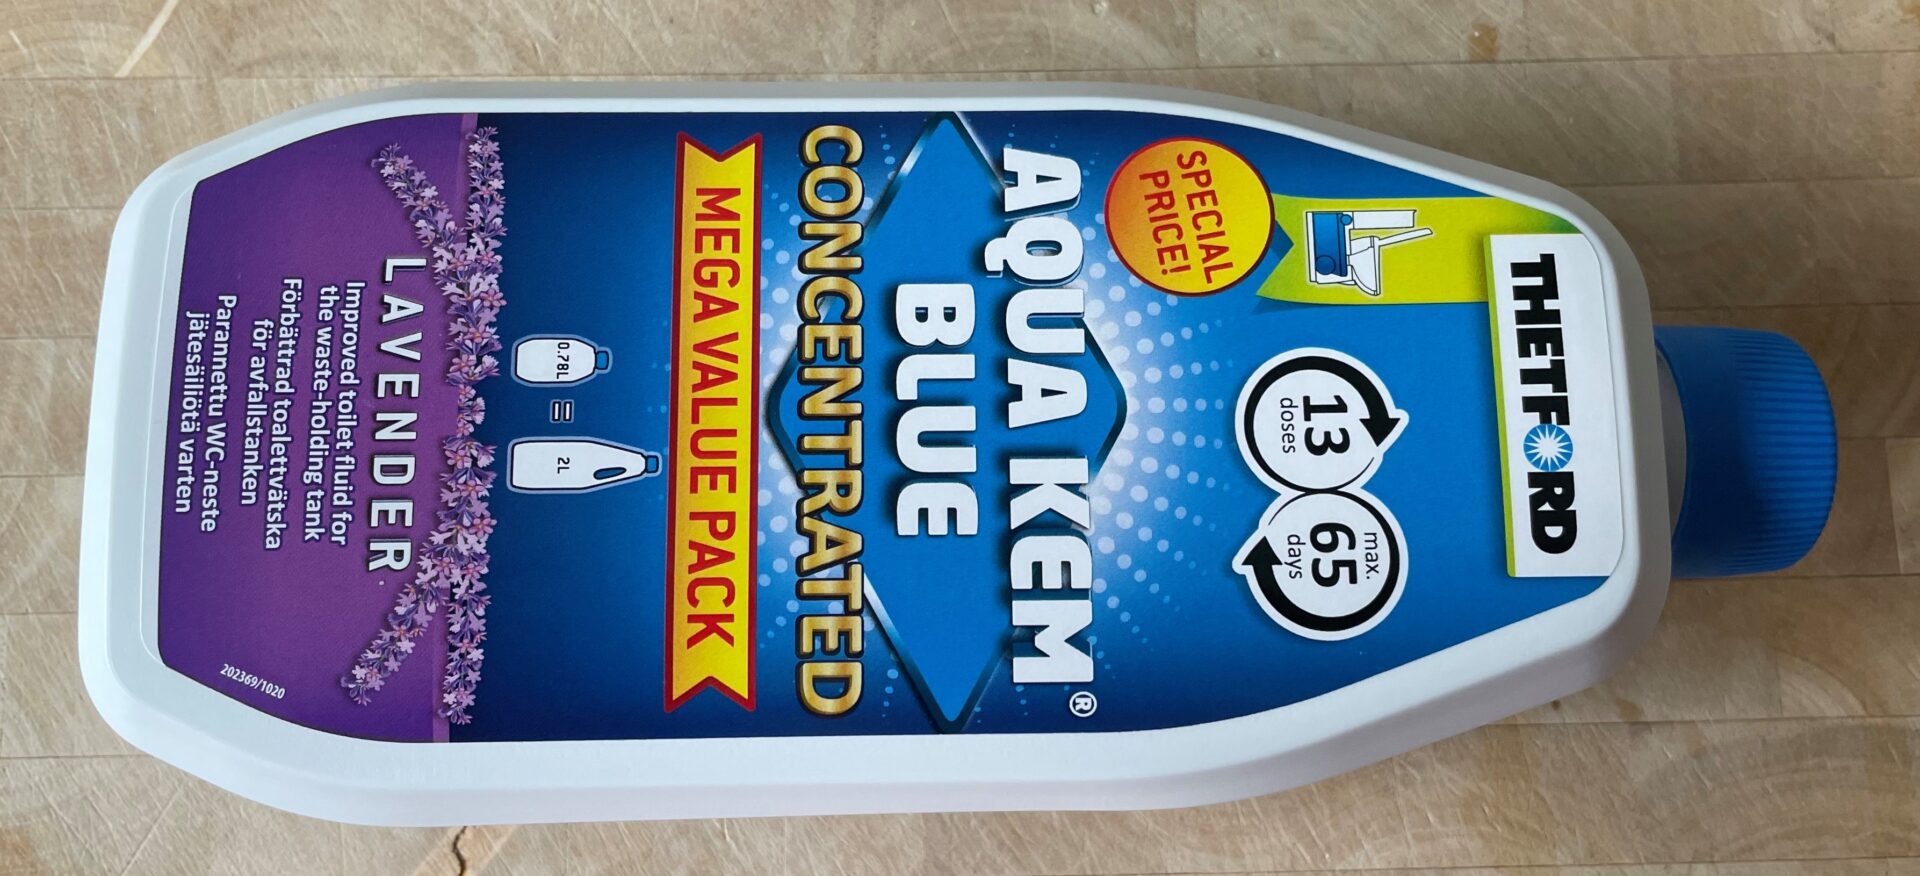 Thetford Aqua Kem Blue Waste Additive 2L